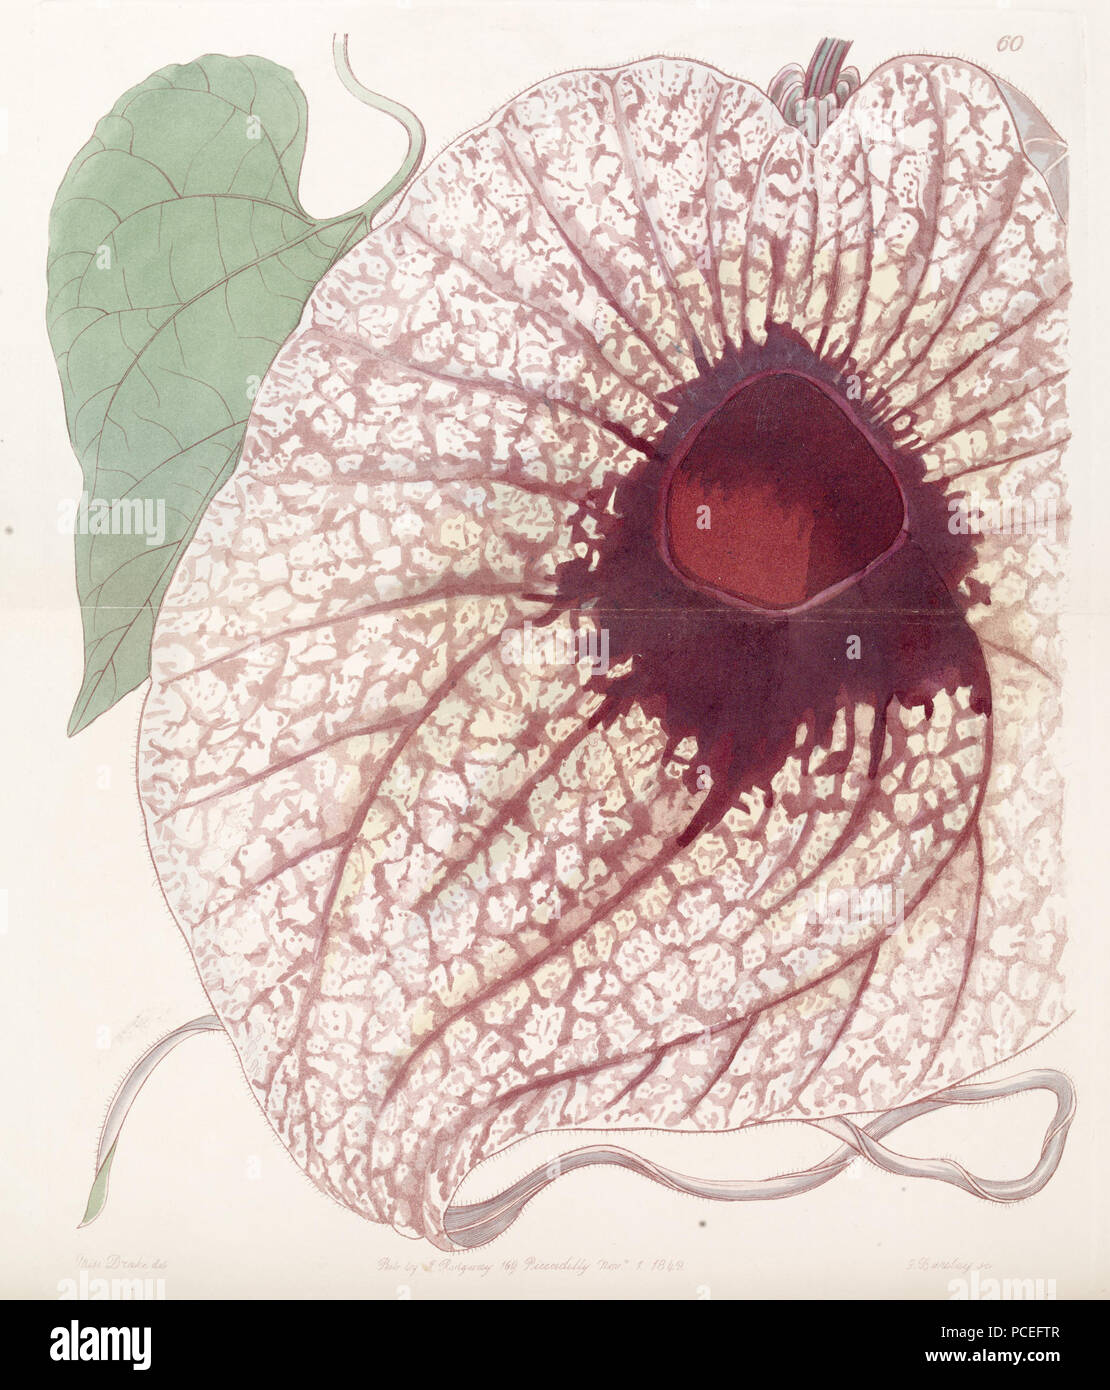 56 Aristolochia grandiflora (A. gigas) Edwards's Bot. Reg. 28.60.1842 Stock Photo